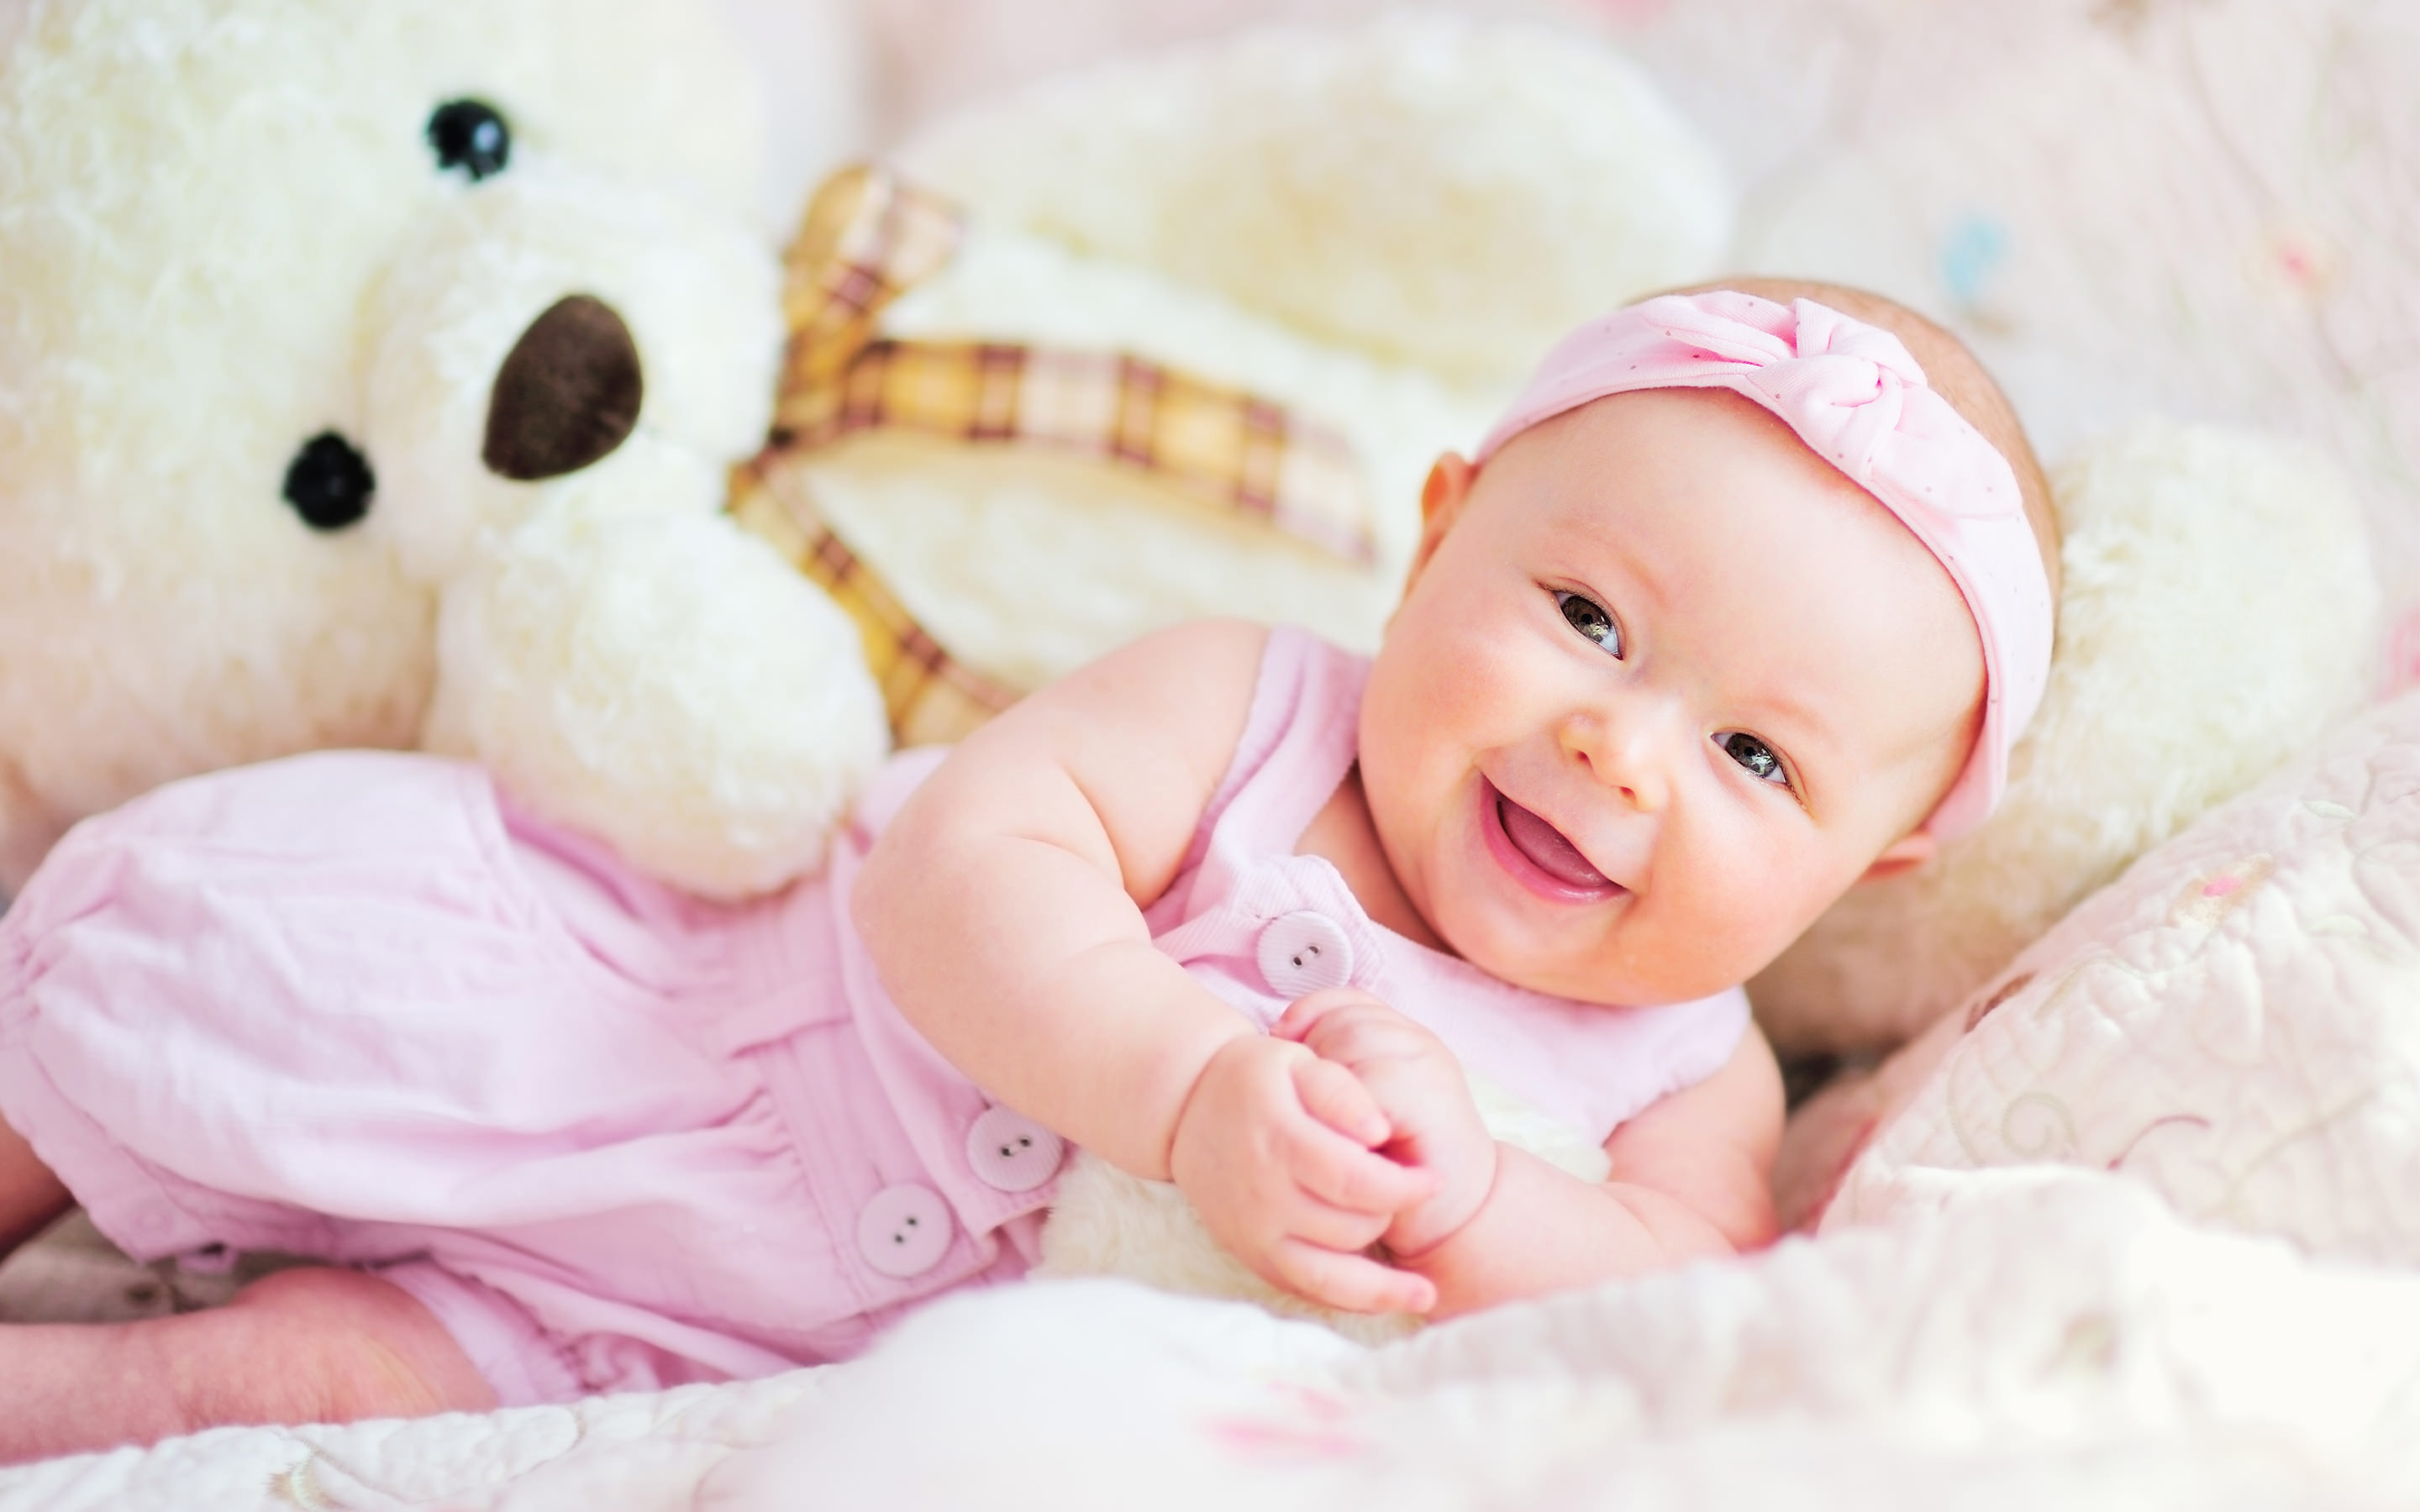 Cute Baby with Teddy Bear Wallpaper